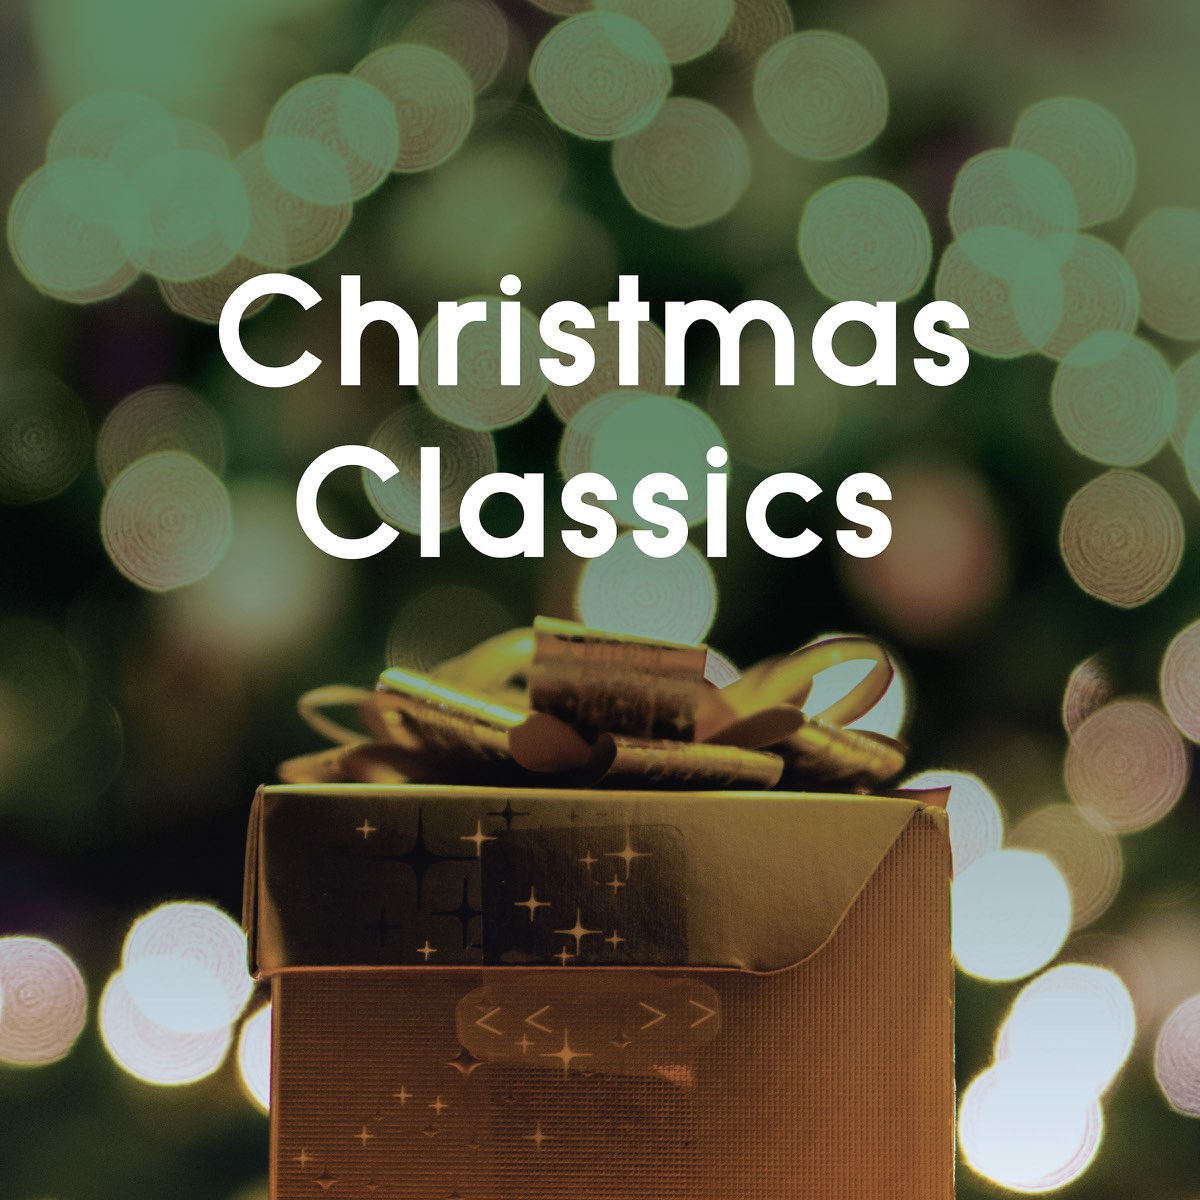 ‎Christmas Classics - Album by Various Artists - Apple Music